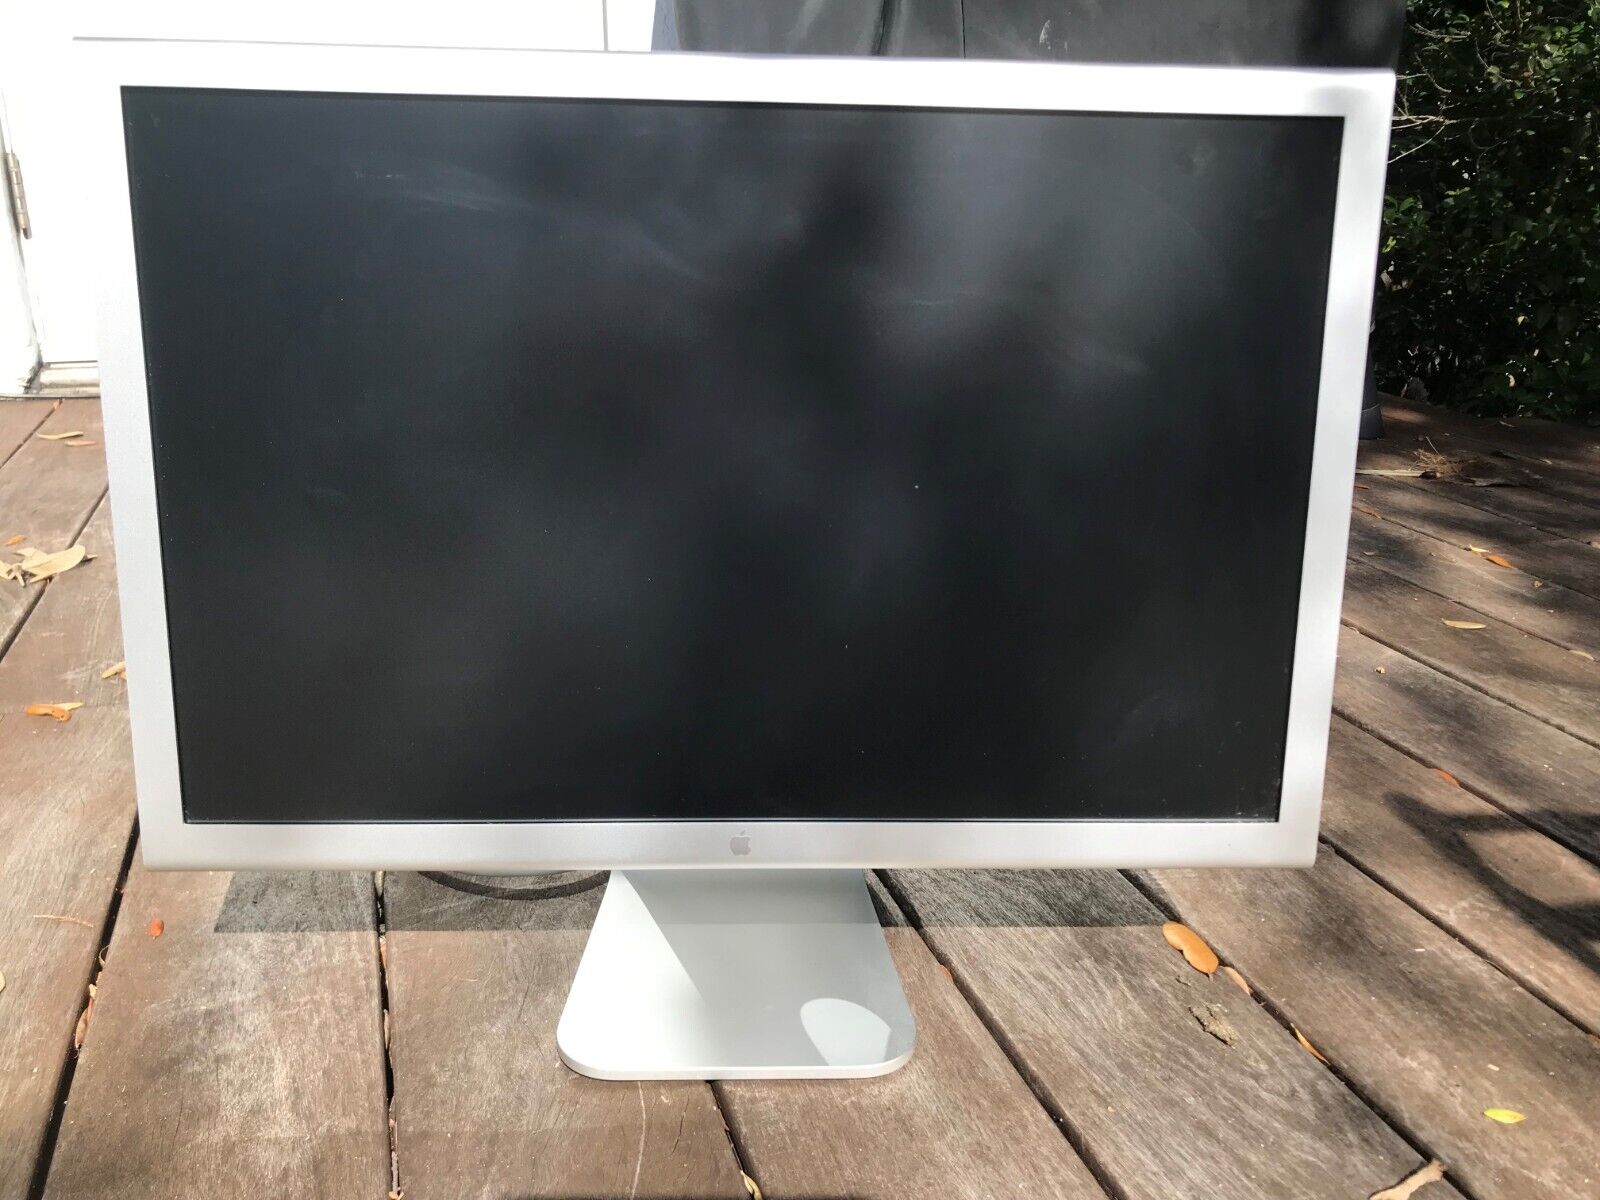 Apple Cinema 23 in Widescreen LCD Monitor - Silver